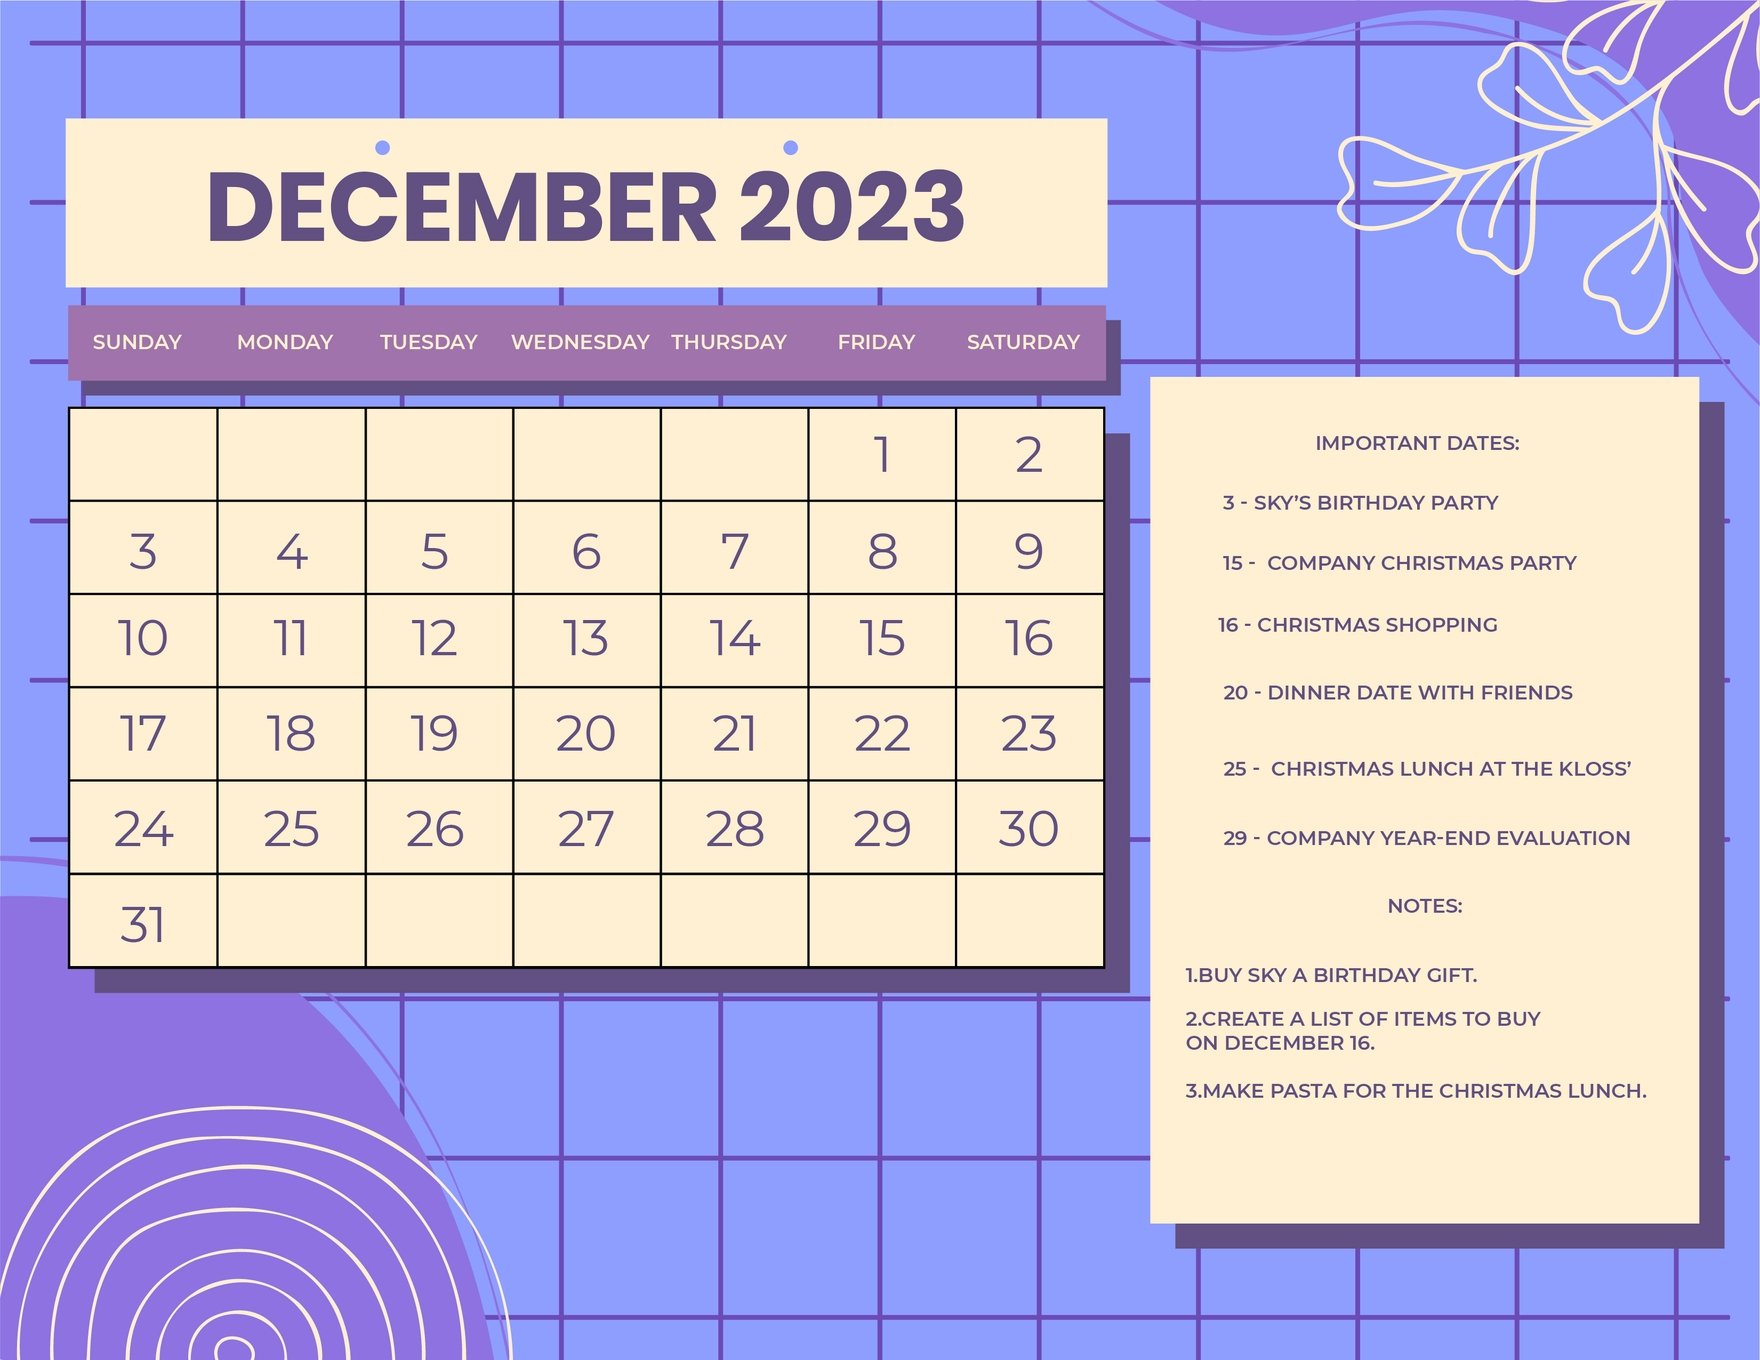 December 2023 Monthly Calendar in Word, Google Docs, Illustrator, EPS, SVG, JPG